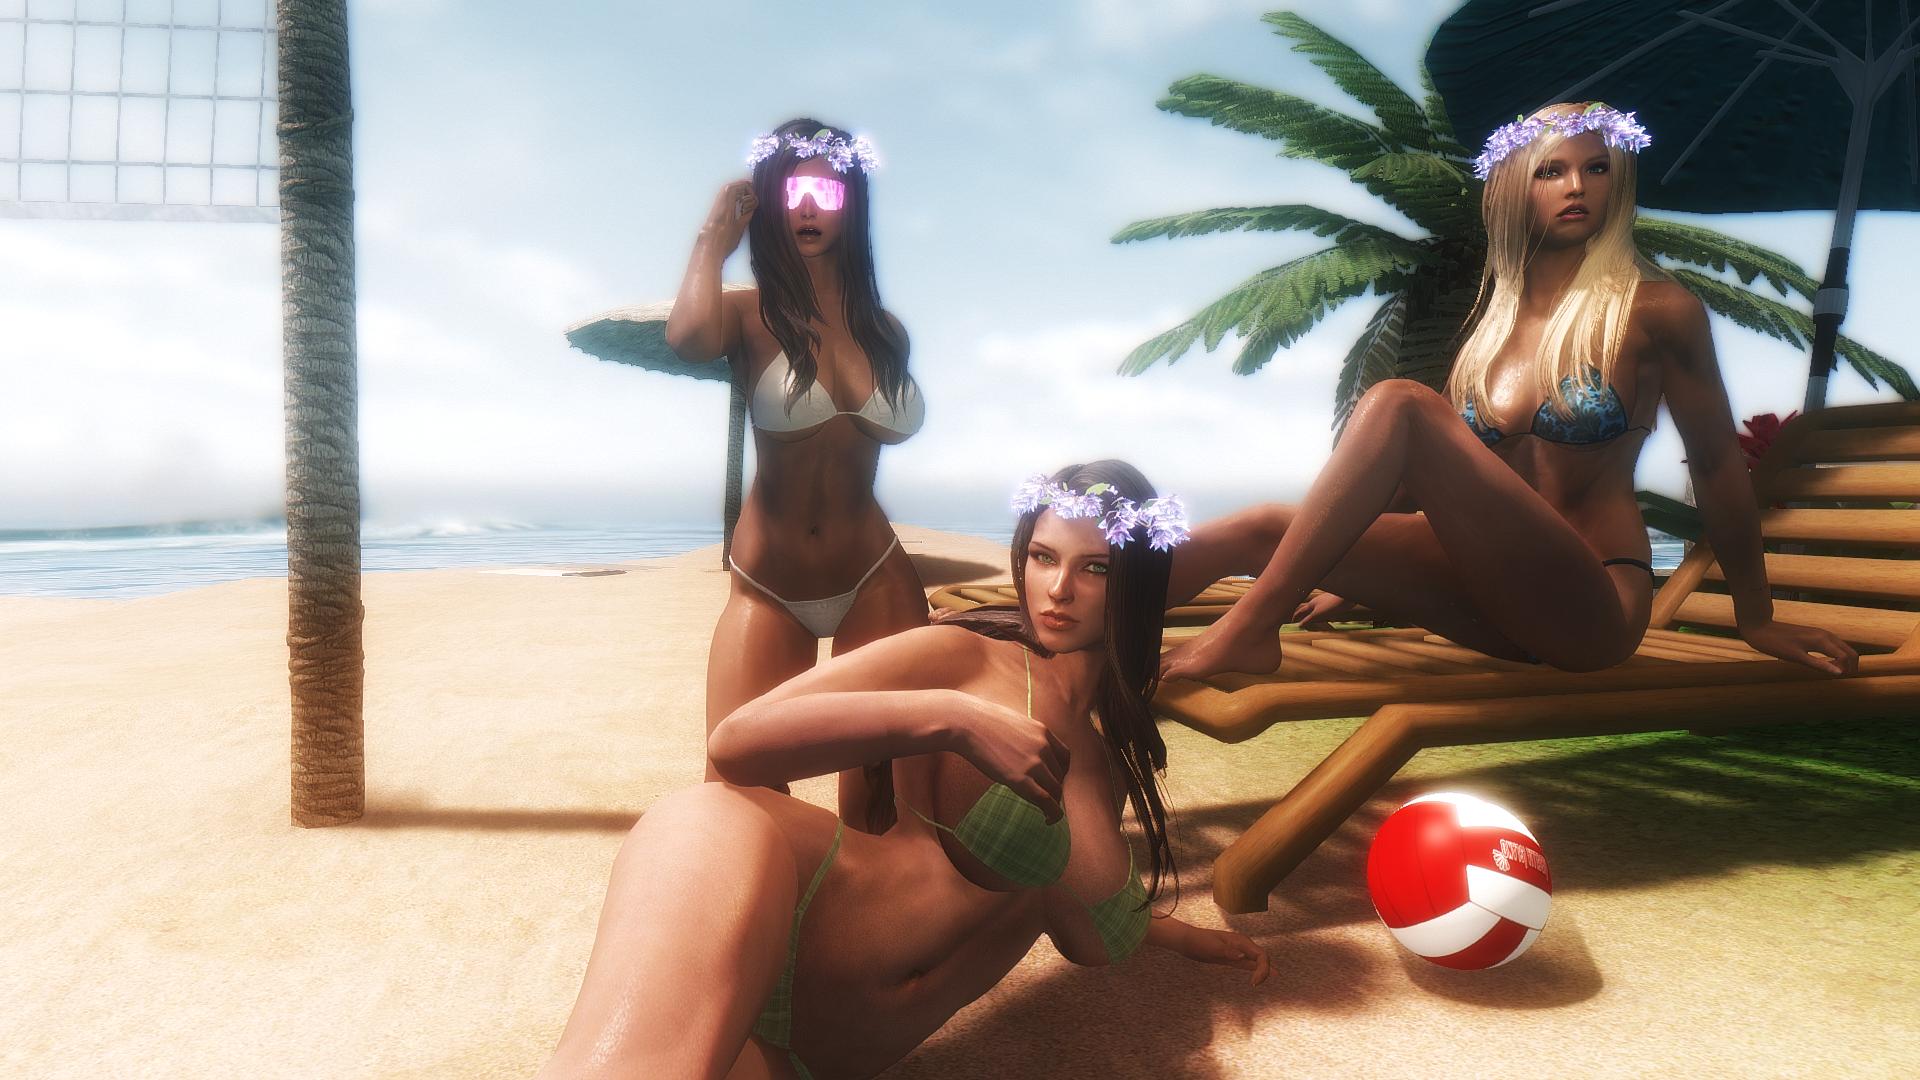 The Beach Holiday Screenshot Contest 29651529038_71369b75a4_o